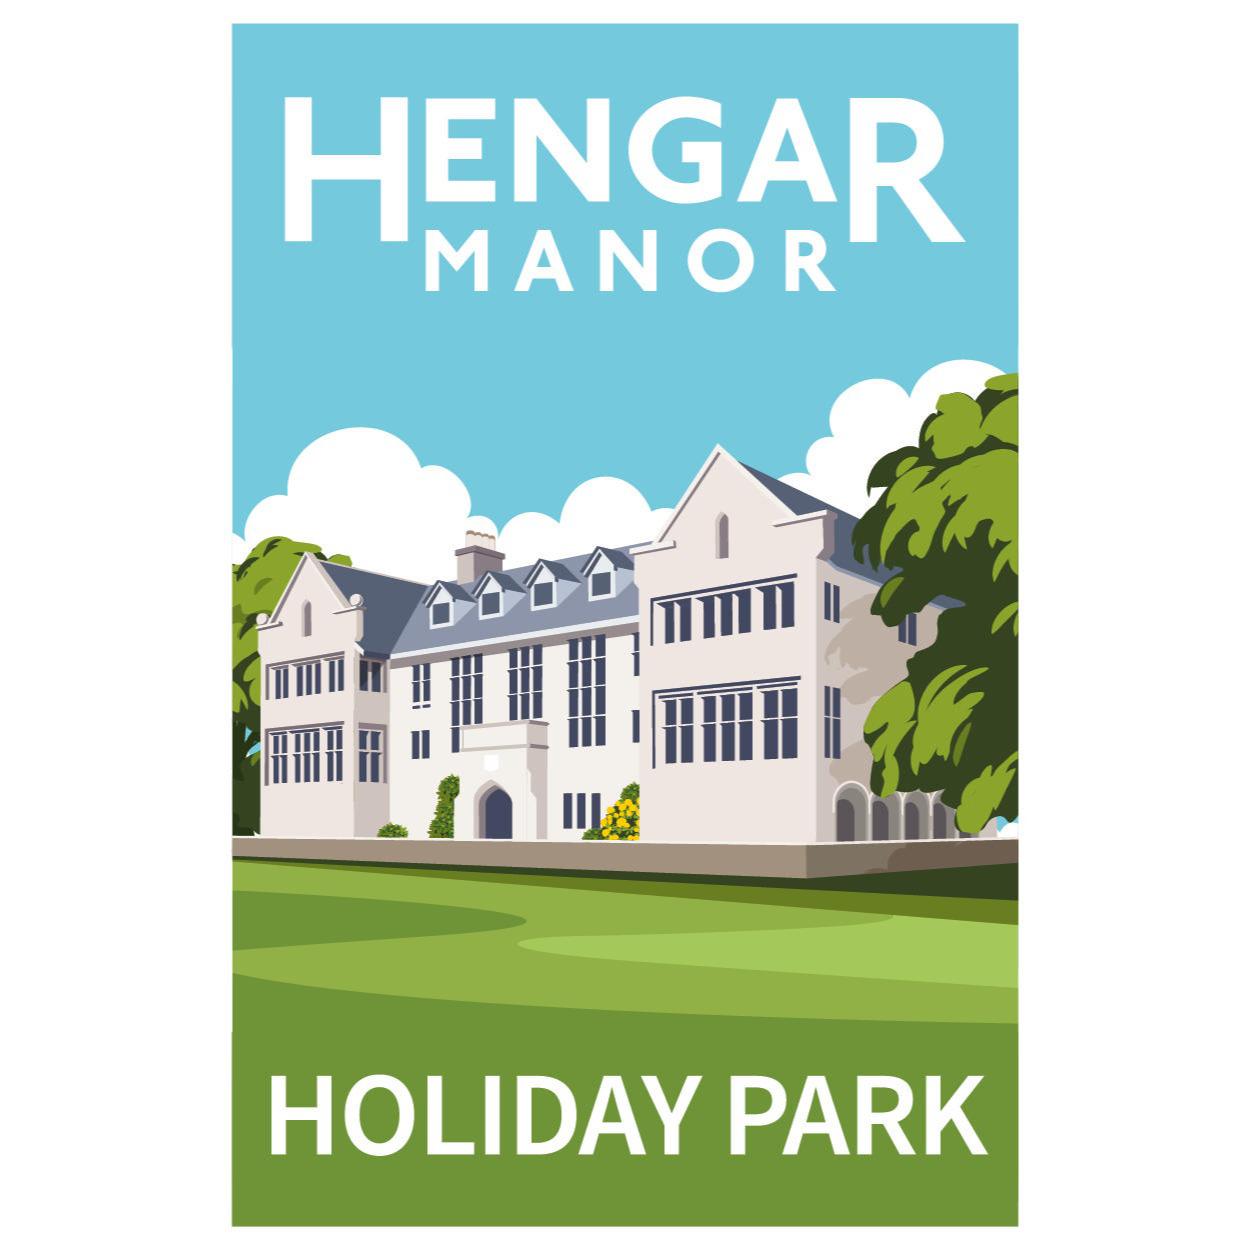 Hengar Manor Holiday Park - Cornwall, Cornwall PL30 3PL - 01208 228852 | ShowMeLocal.com